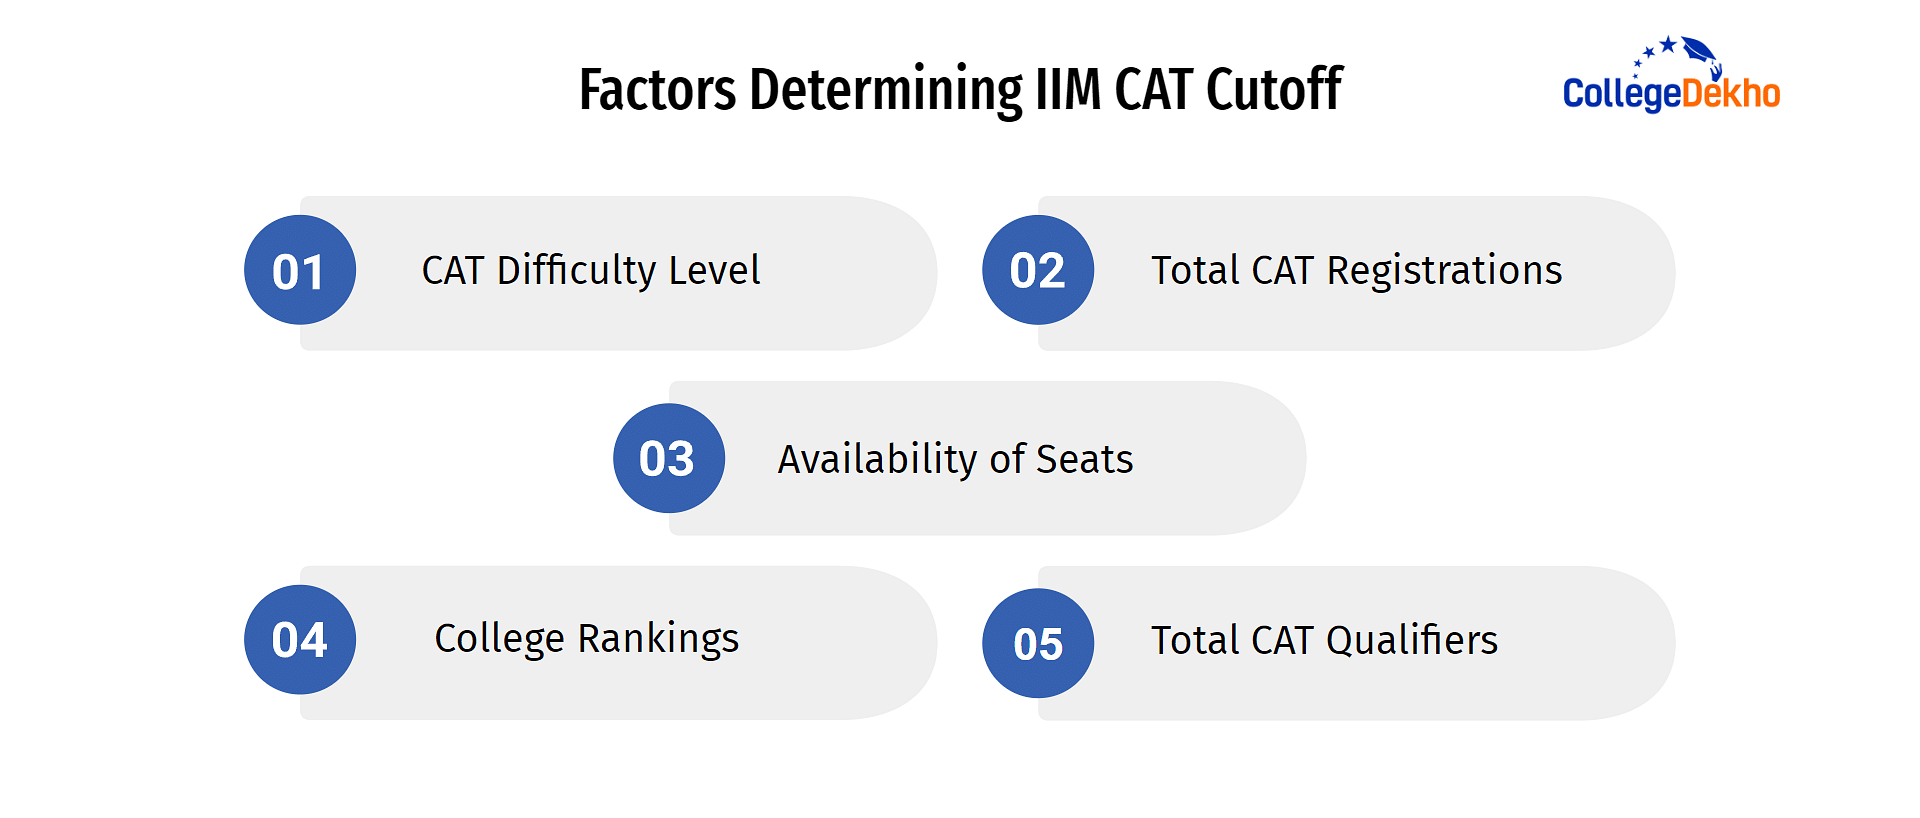 Factors Determining IIM CAT Cutoff